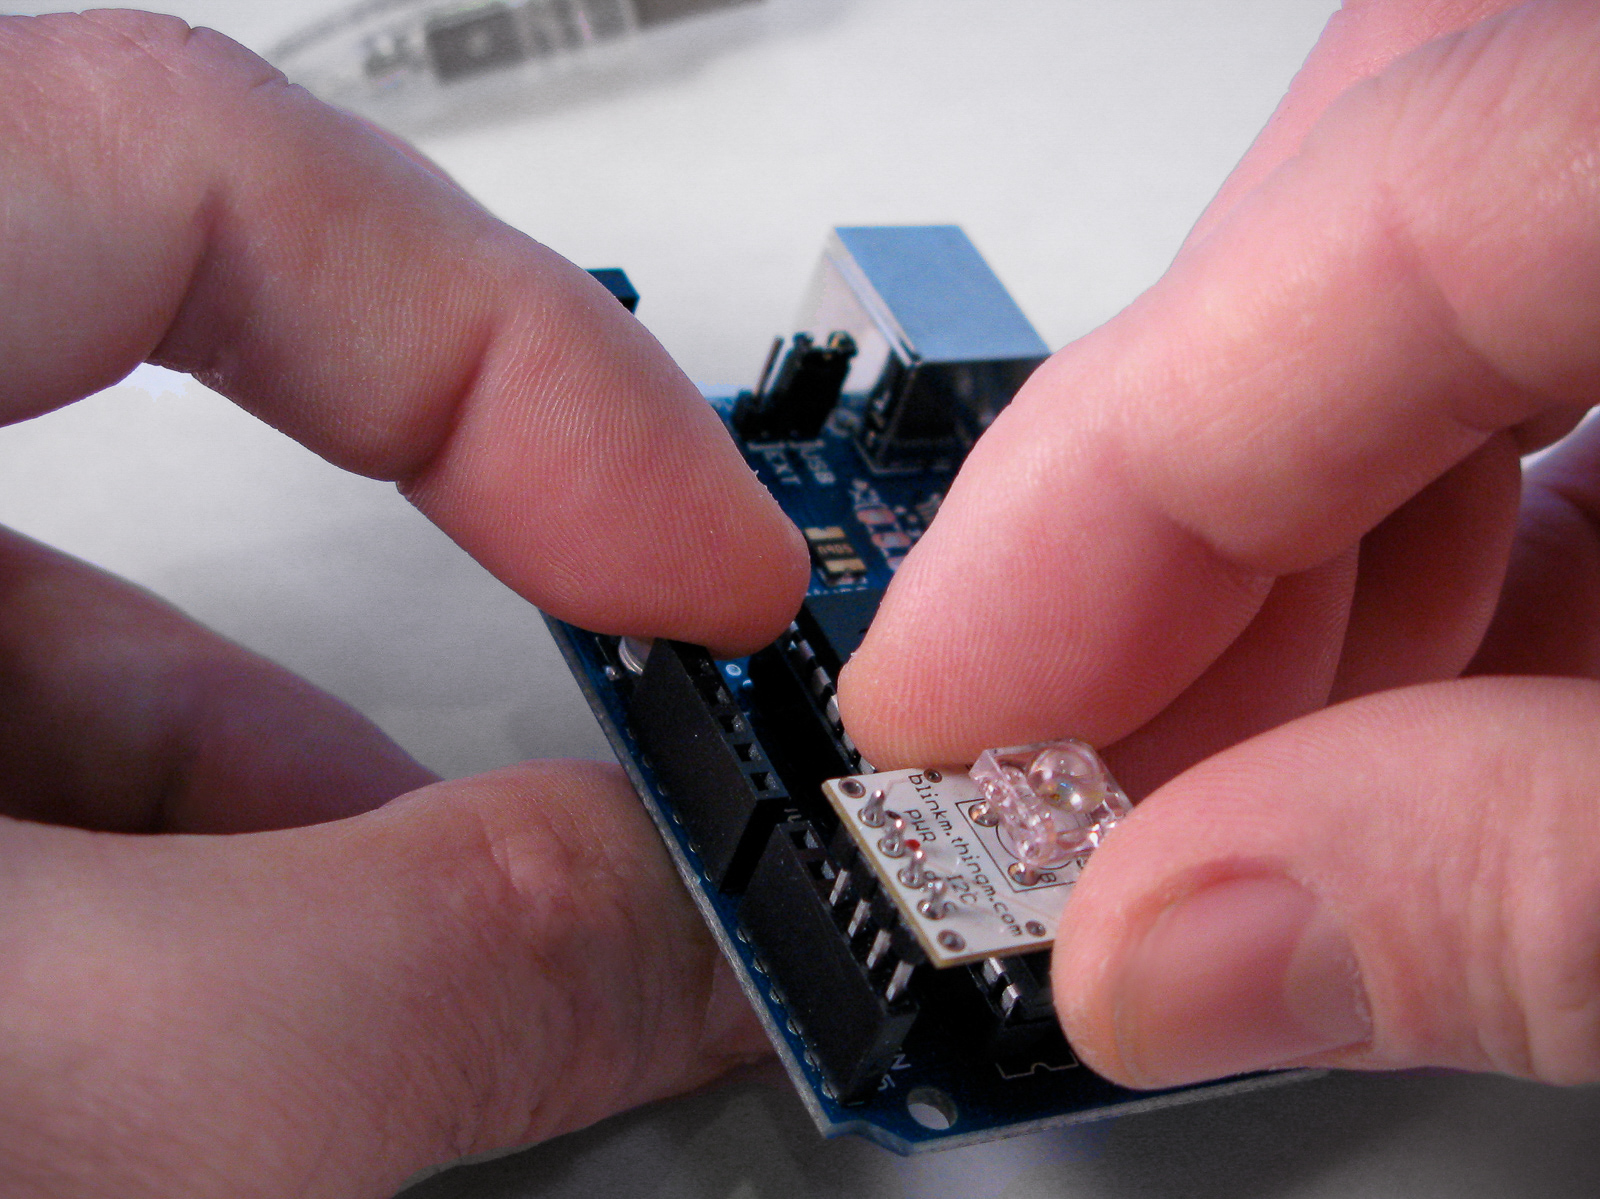 Blink M being installed on an Arduino